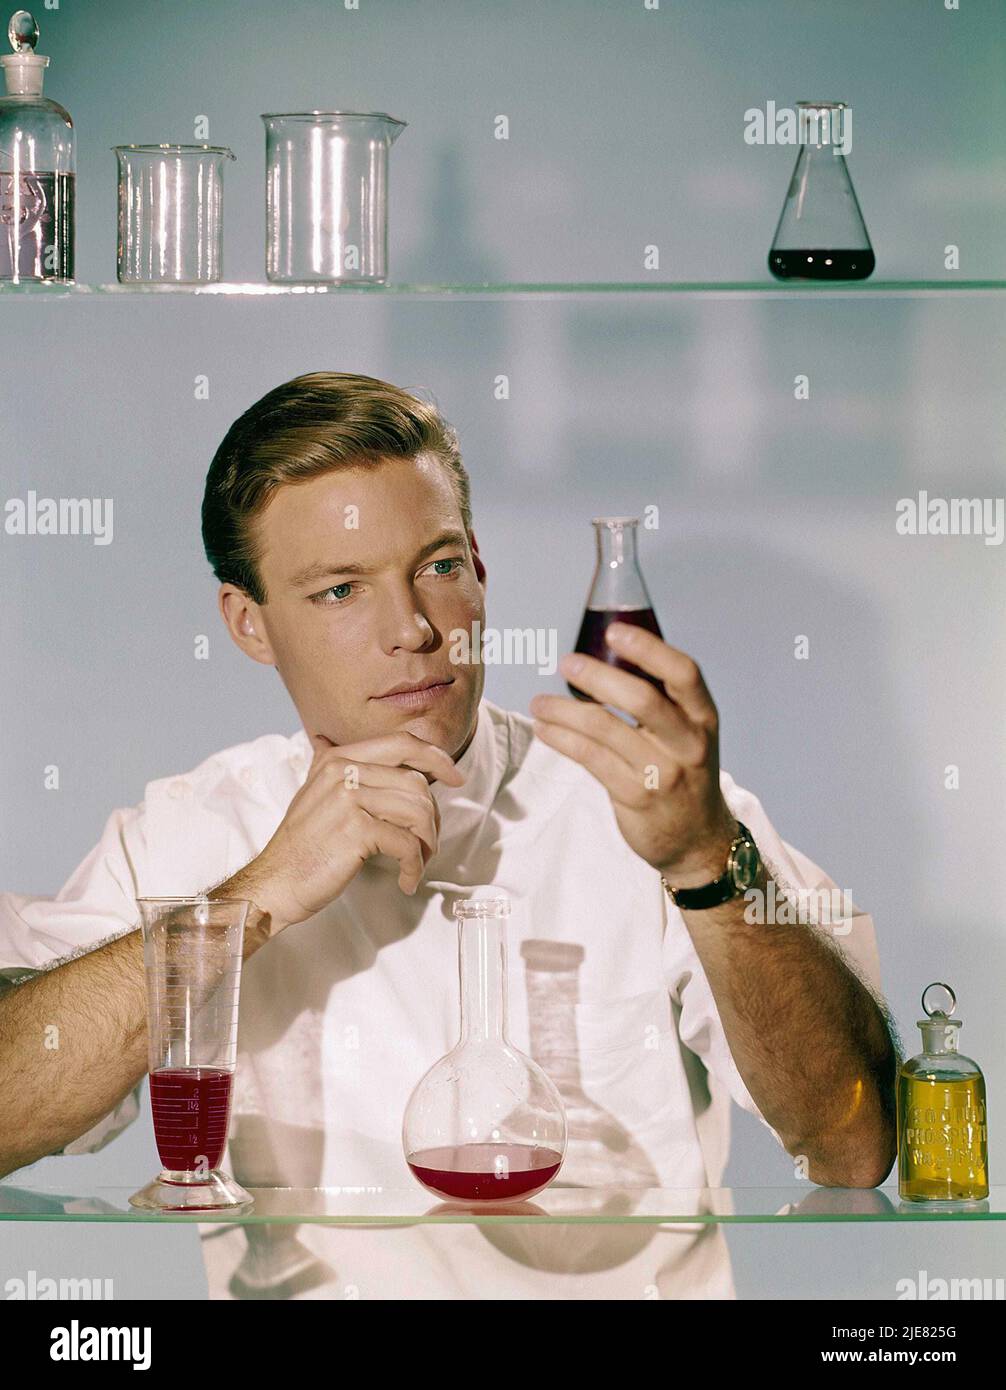 RICHARD CHAMBERLAIN in DR. KILDARE (1961), directed by ELLIOT SILVERSTEIN, JUD TAYLOR, JOHN BRAHM, ALF KJELLIN and JOHN NEWLAND. Credit: MGM TELEVISION / Album Stock Photo